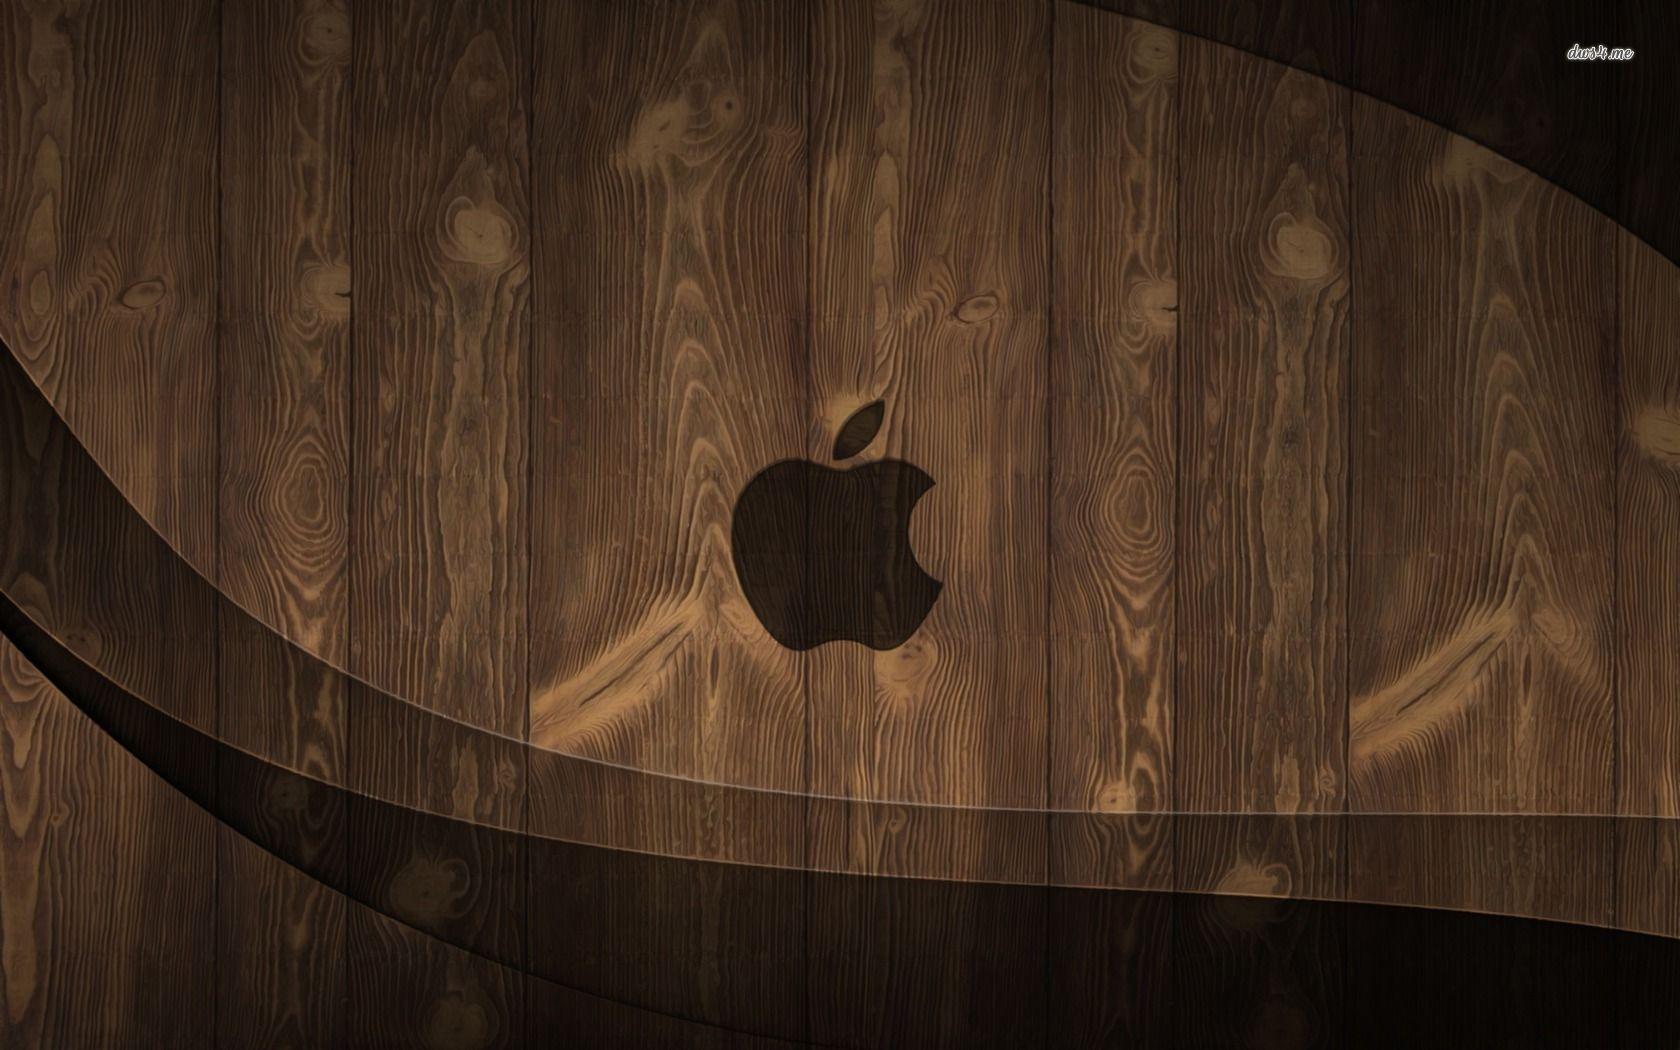 Wooden Apple Logo wallpaper wallpaper - #